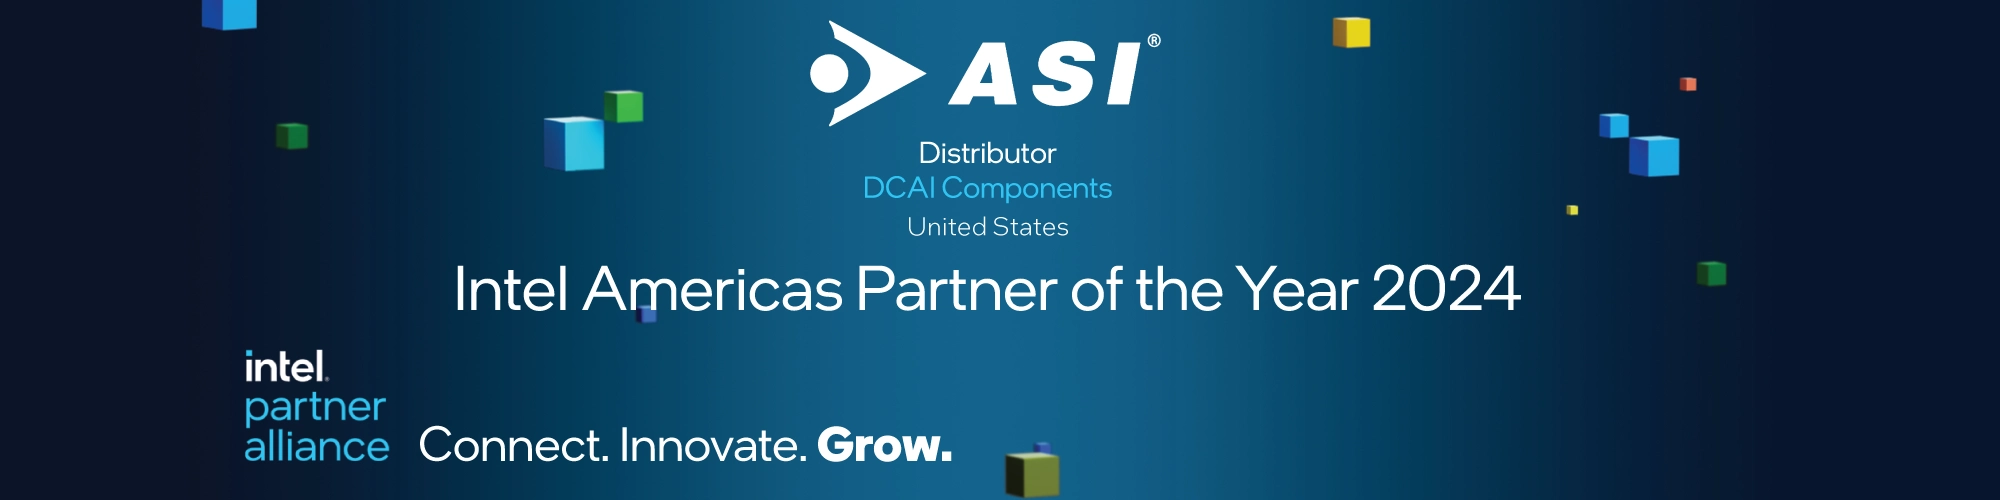 ASI Intel Partner of the Year Award 2024